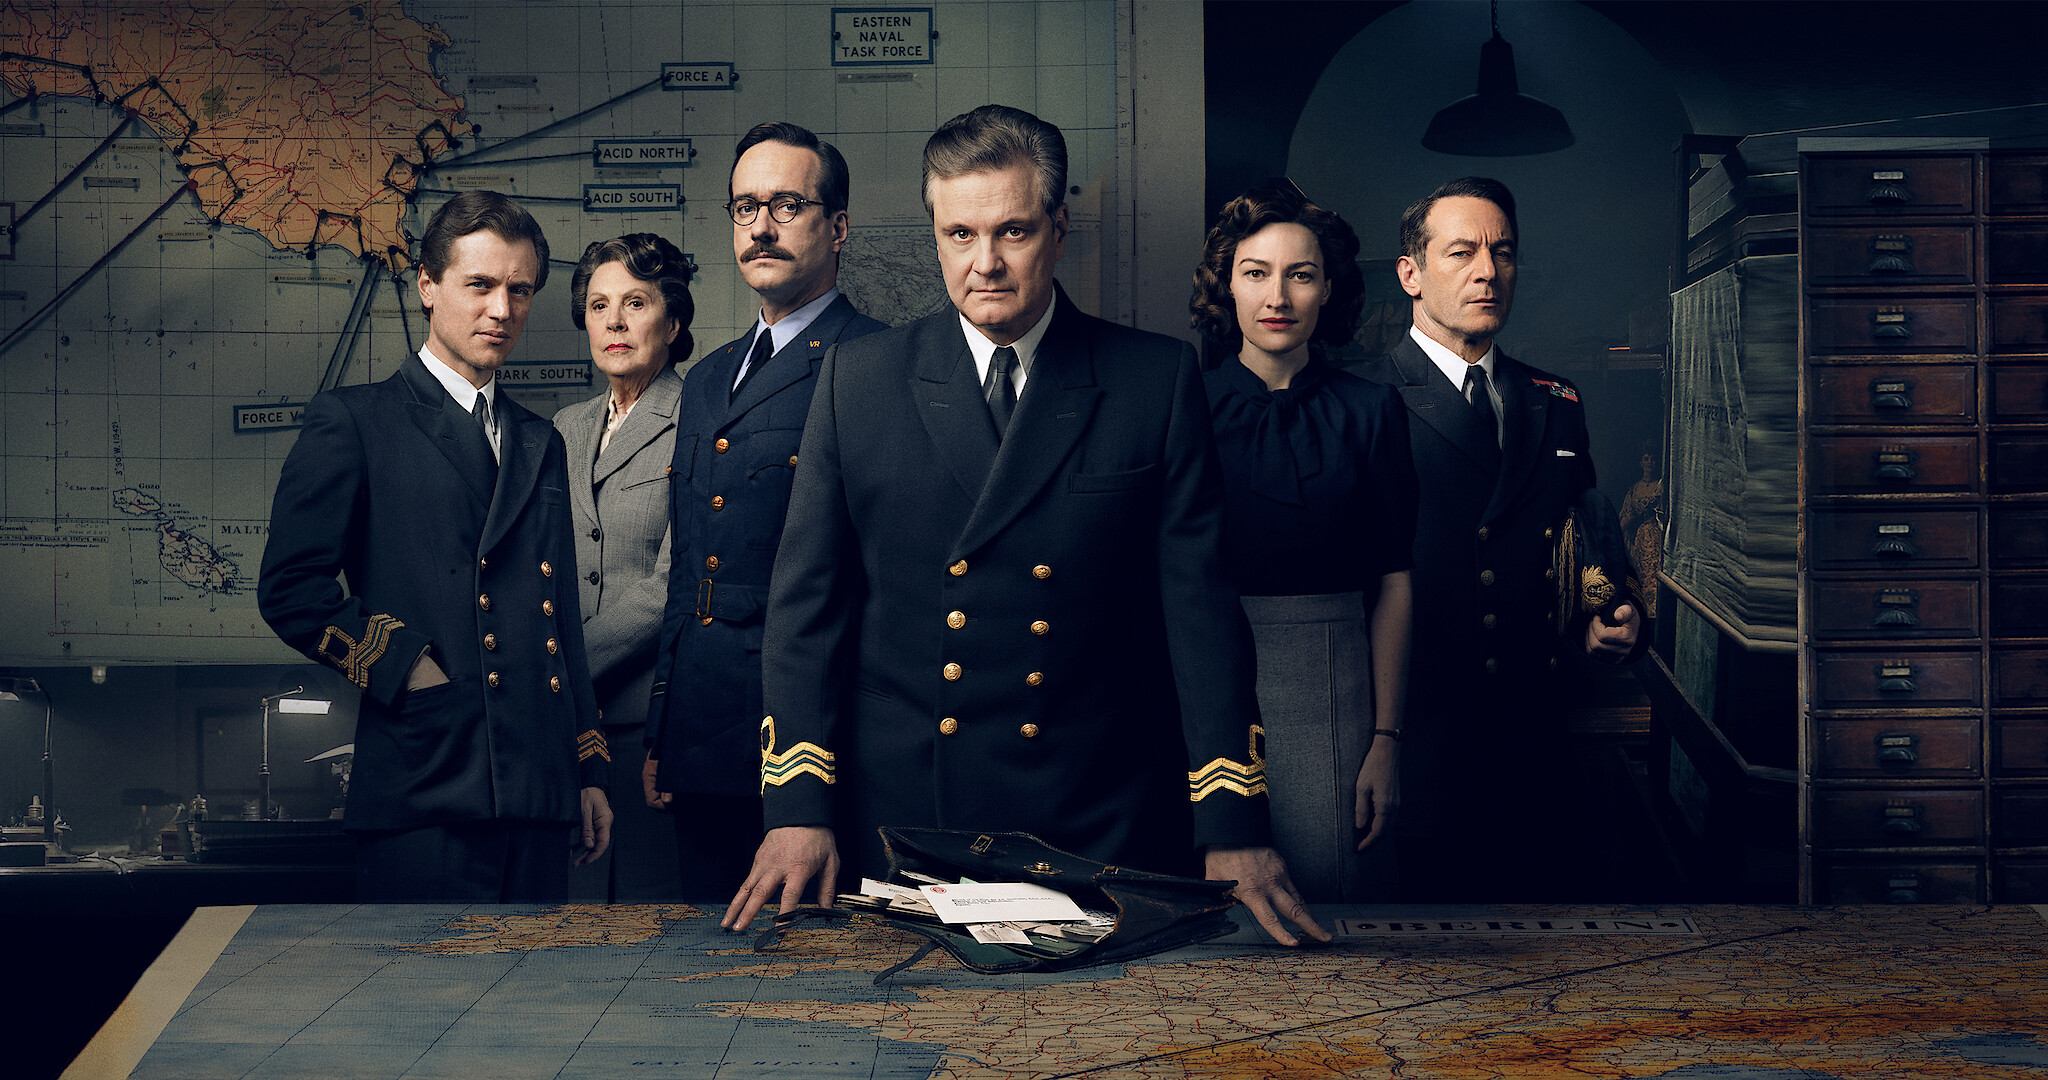 Pure Love Operation Ch 1 Operation Mincemeat' Cast: Meet the Actors of the World War II Drama -  Netflix Tudum